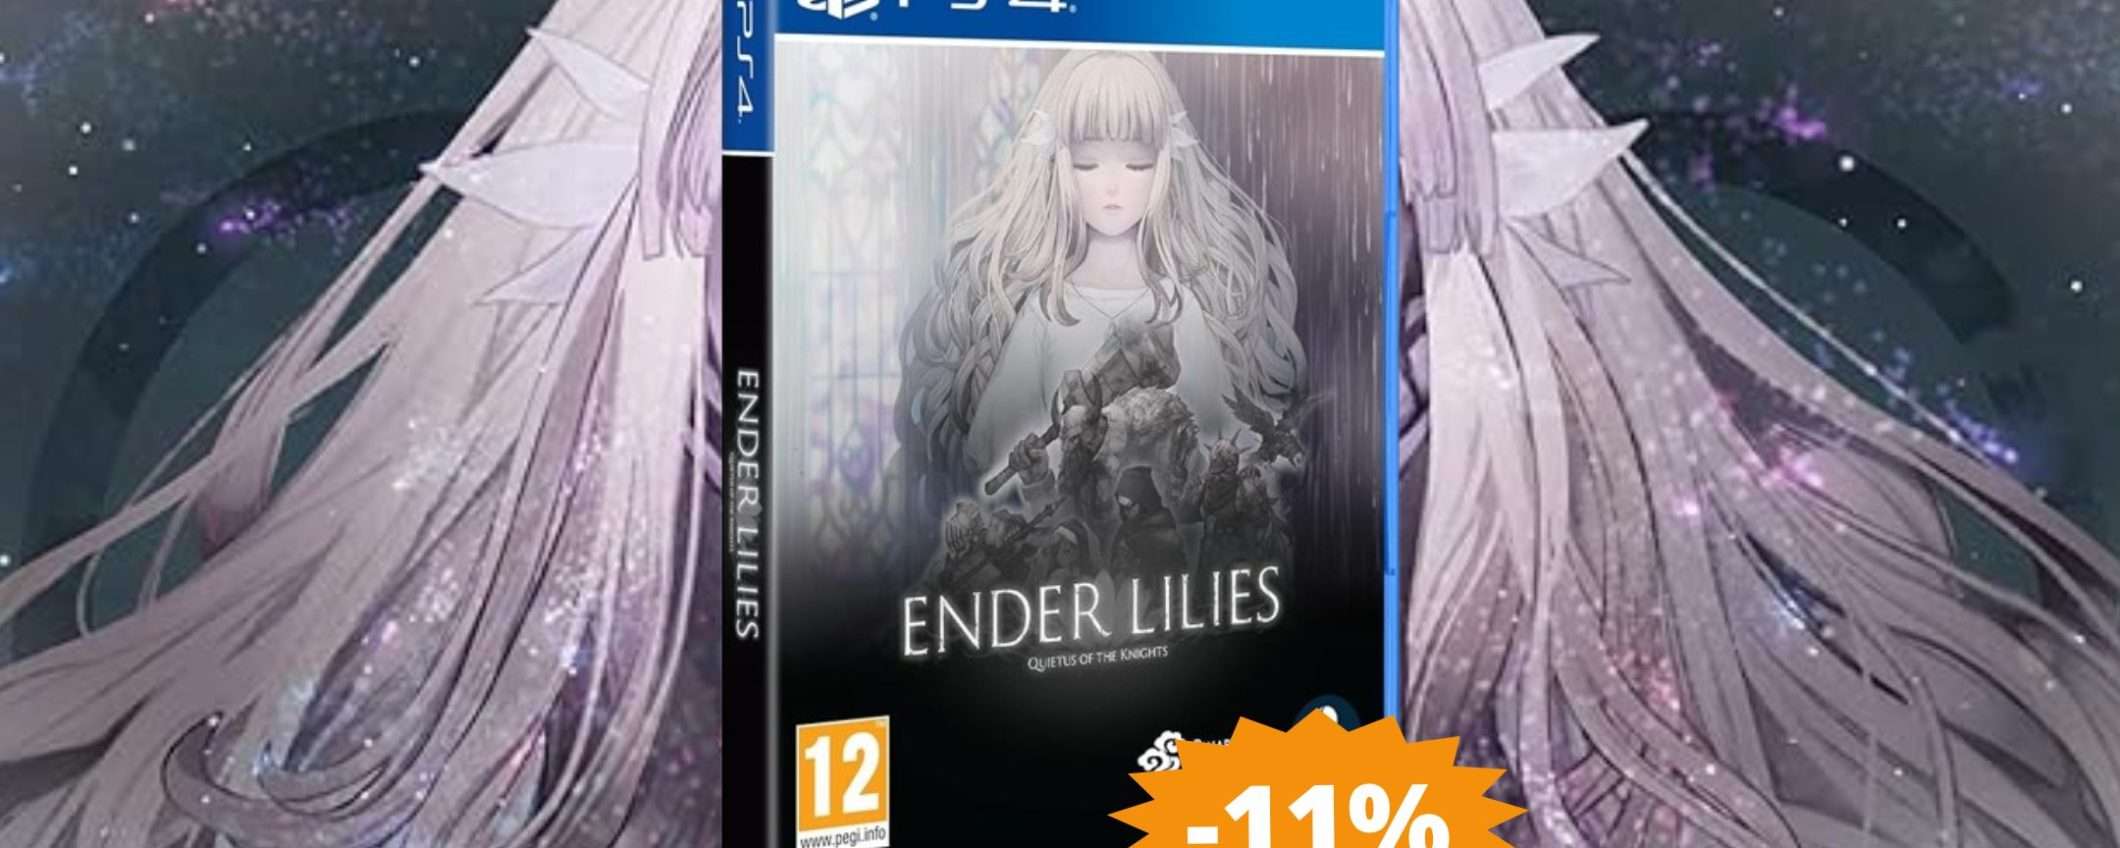 Ender Lilies per PS4: un'avventura MAGICA in SCONTO